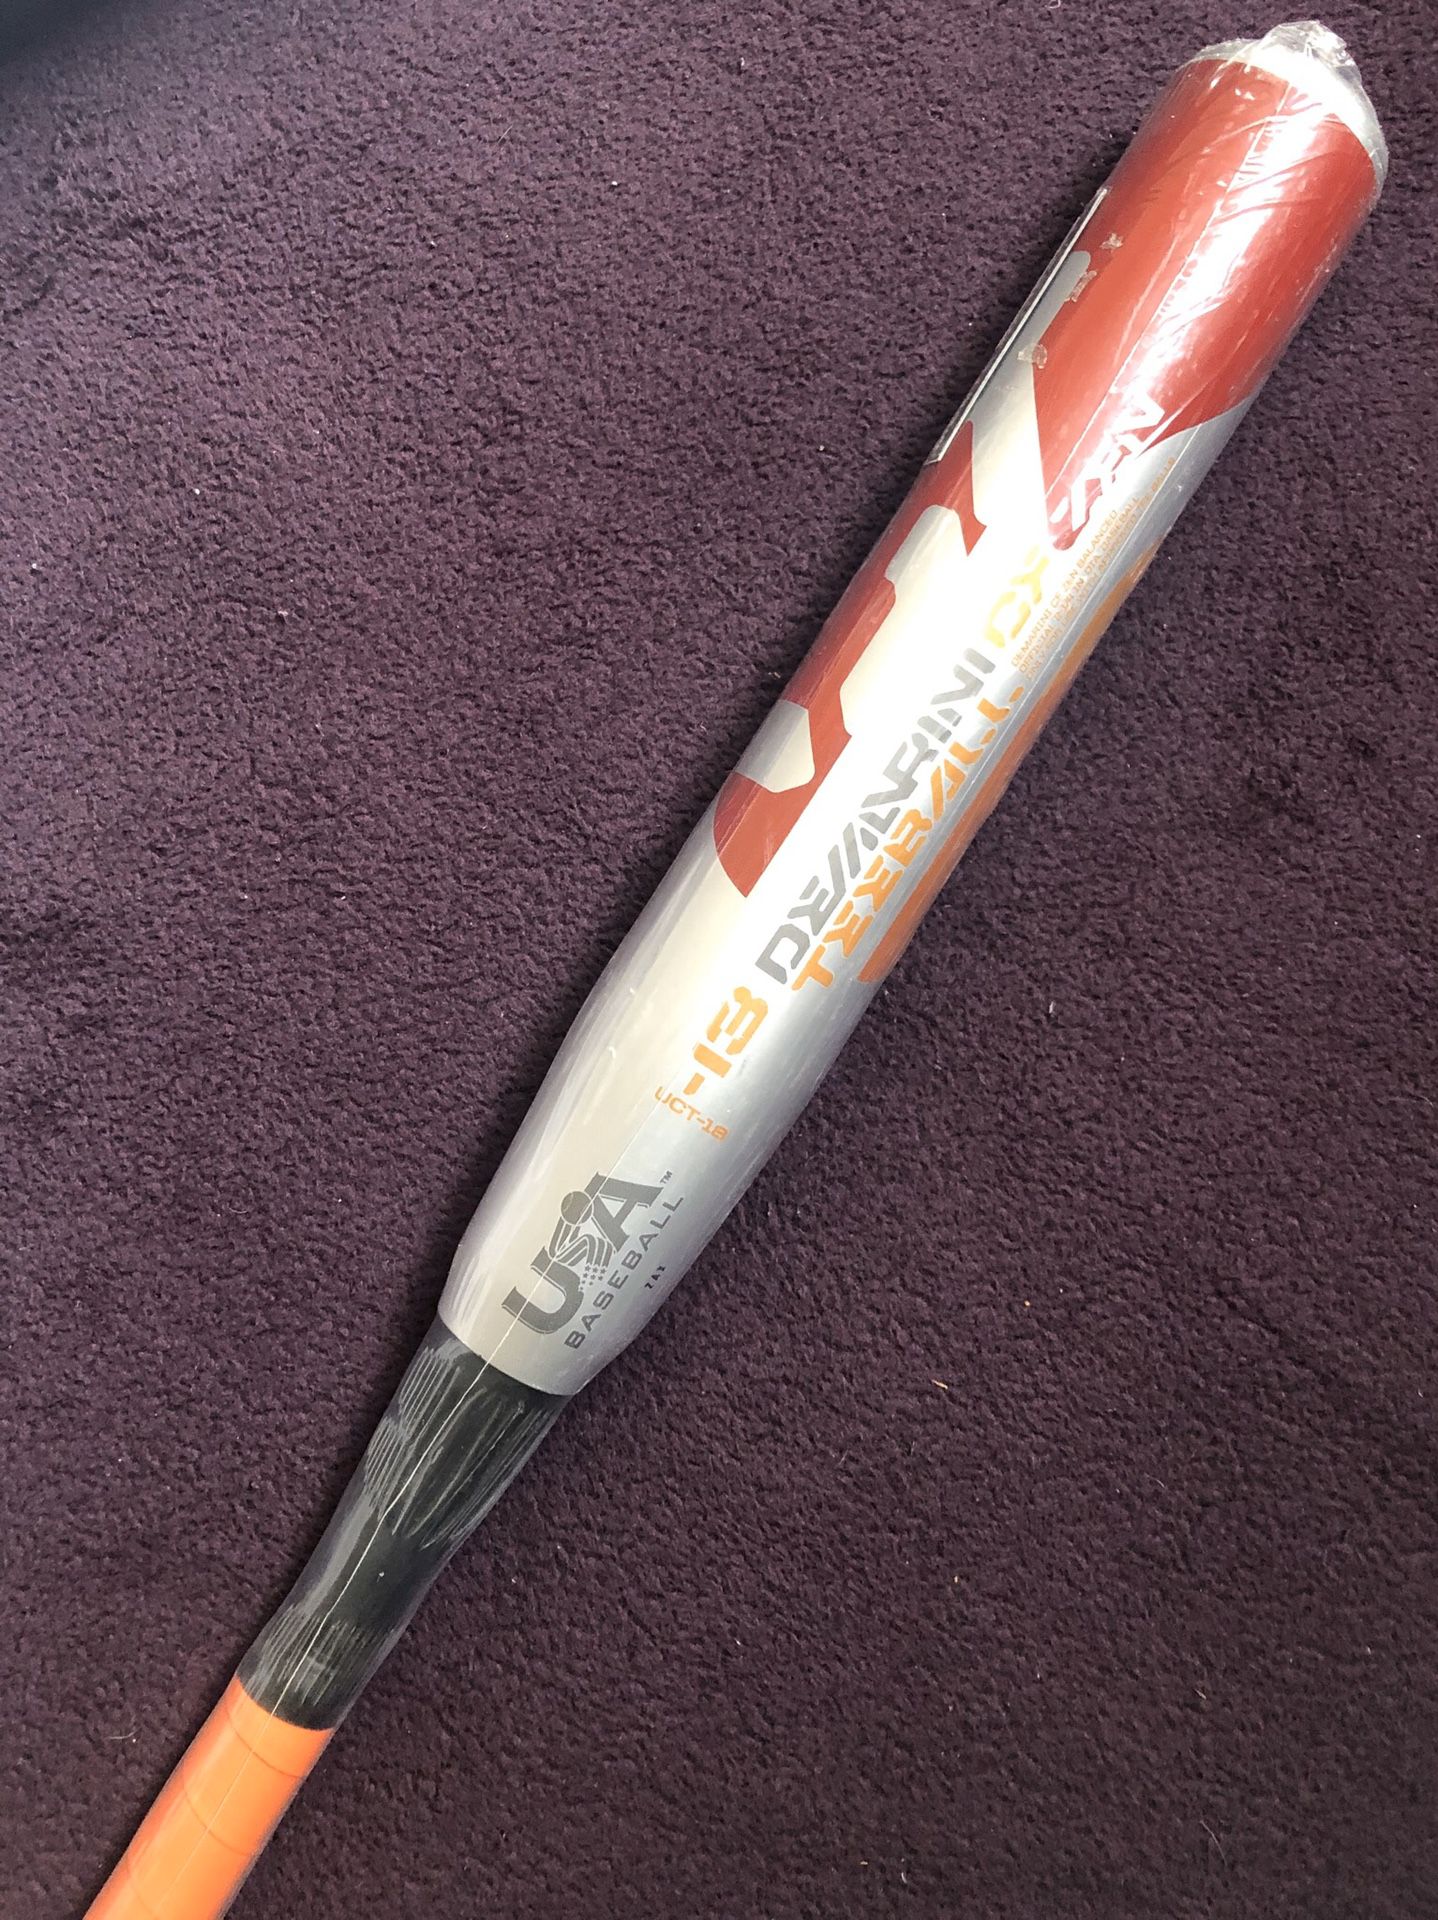 DeMarini CF Zen Composite Tee-Ball Baseball Bat